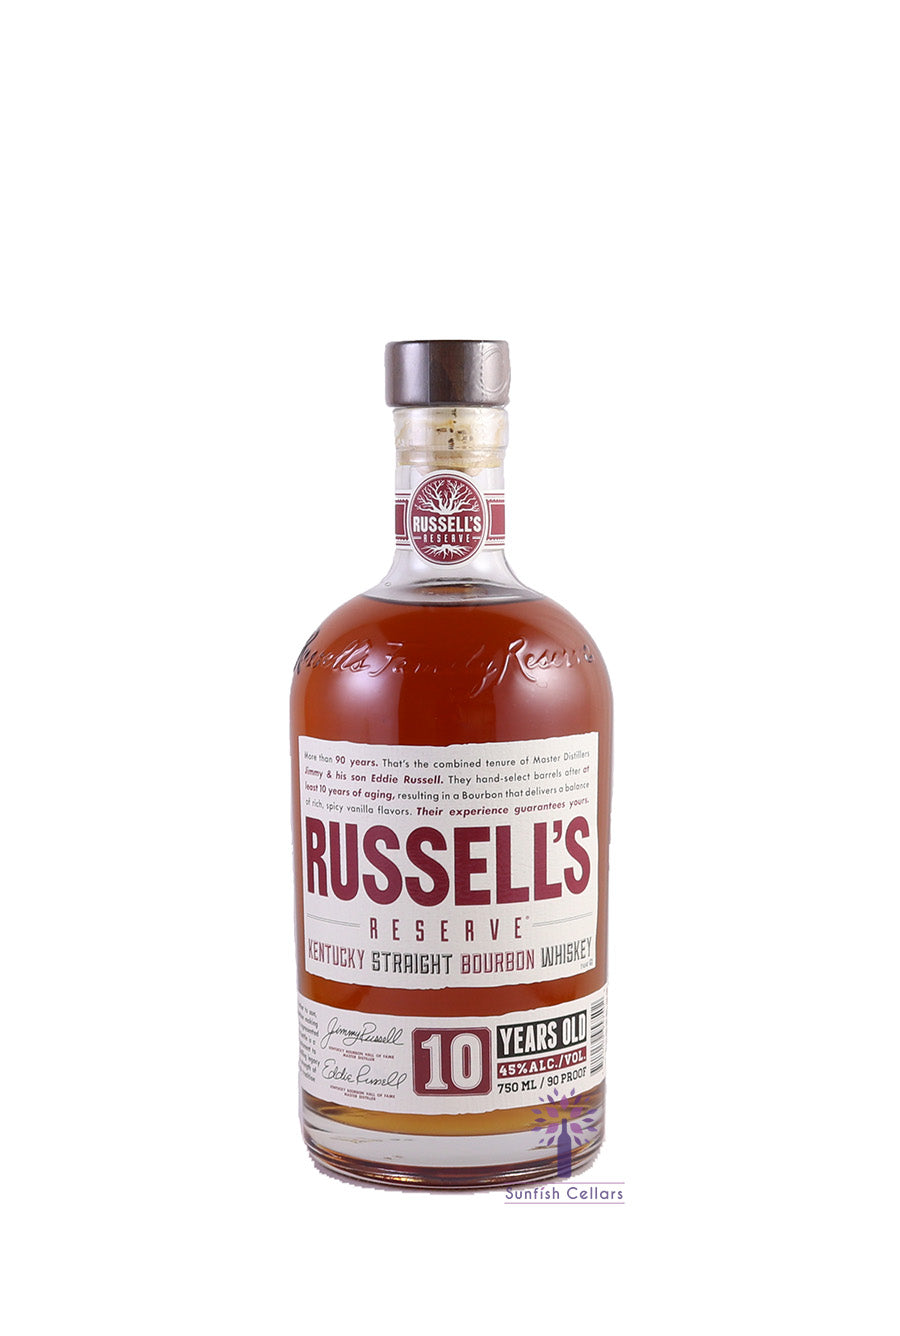 Russell's Reserve 10yr Bourbon 750ml